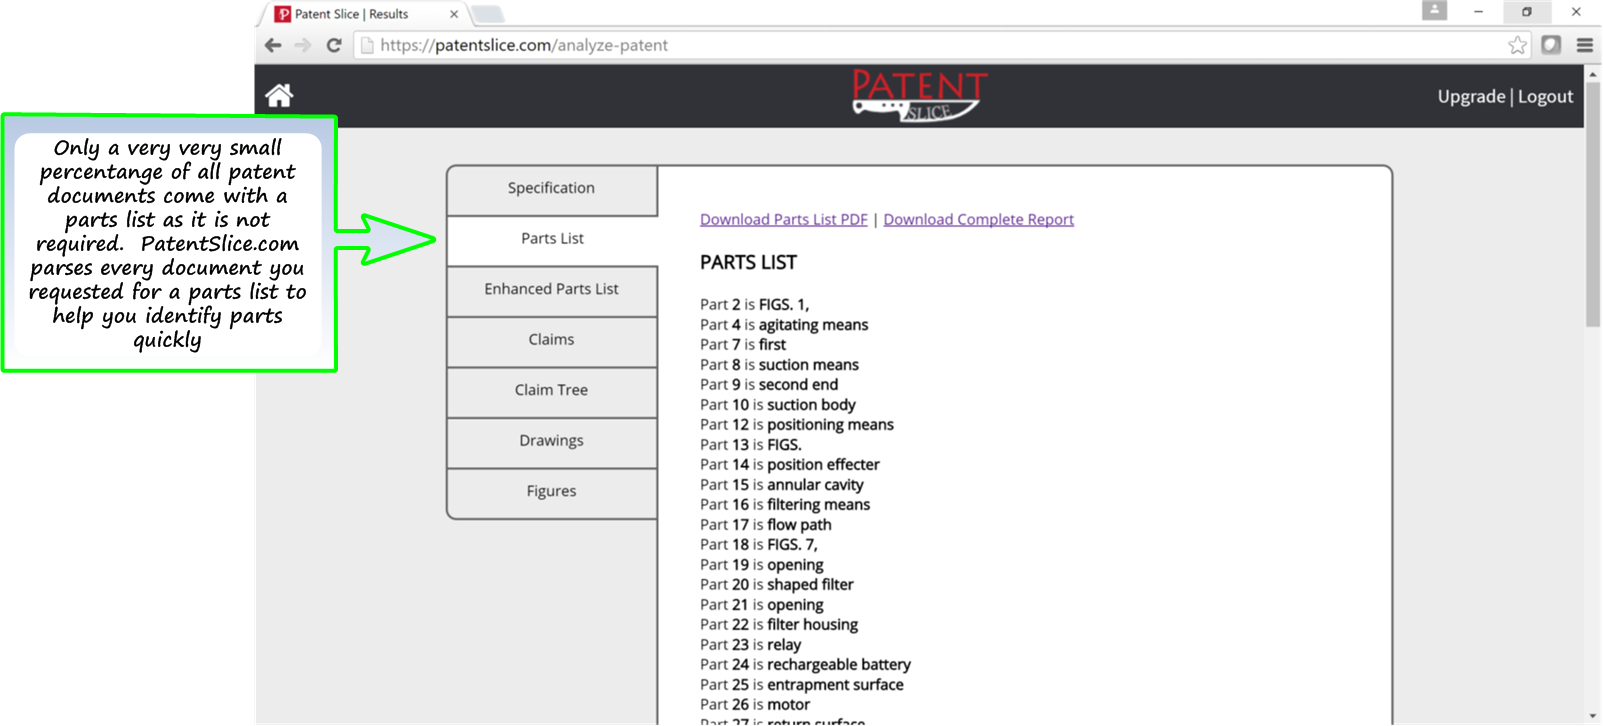 Parts List of Patent